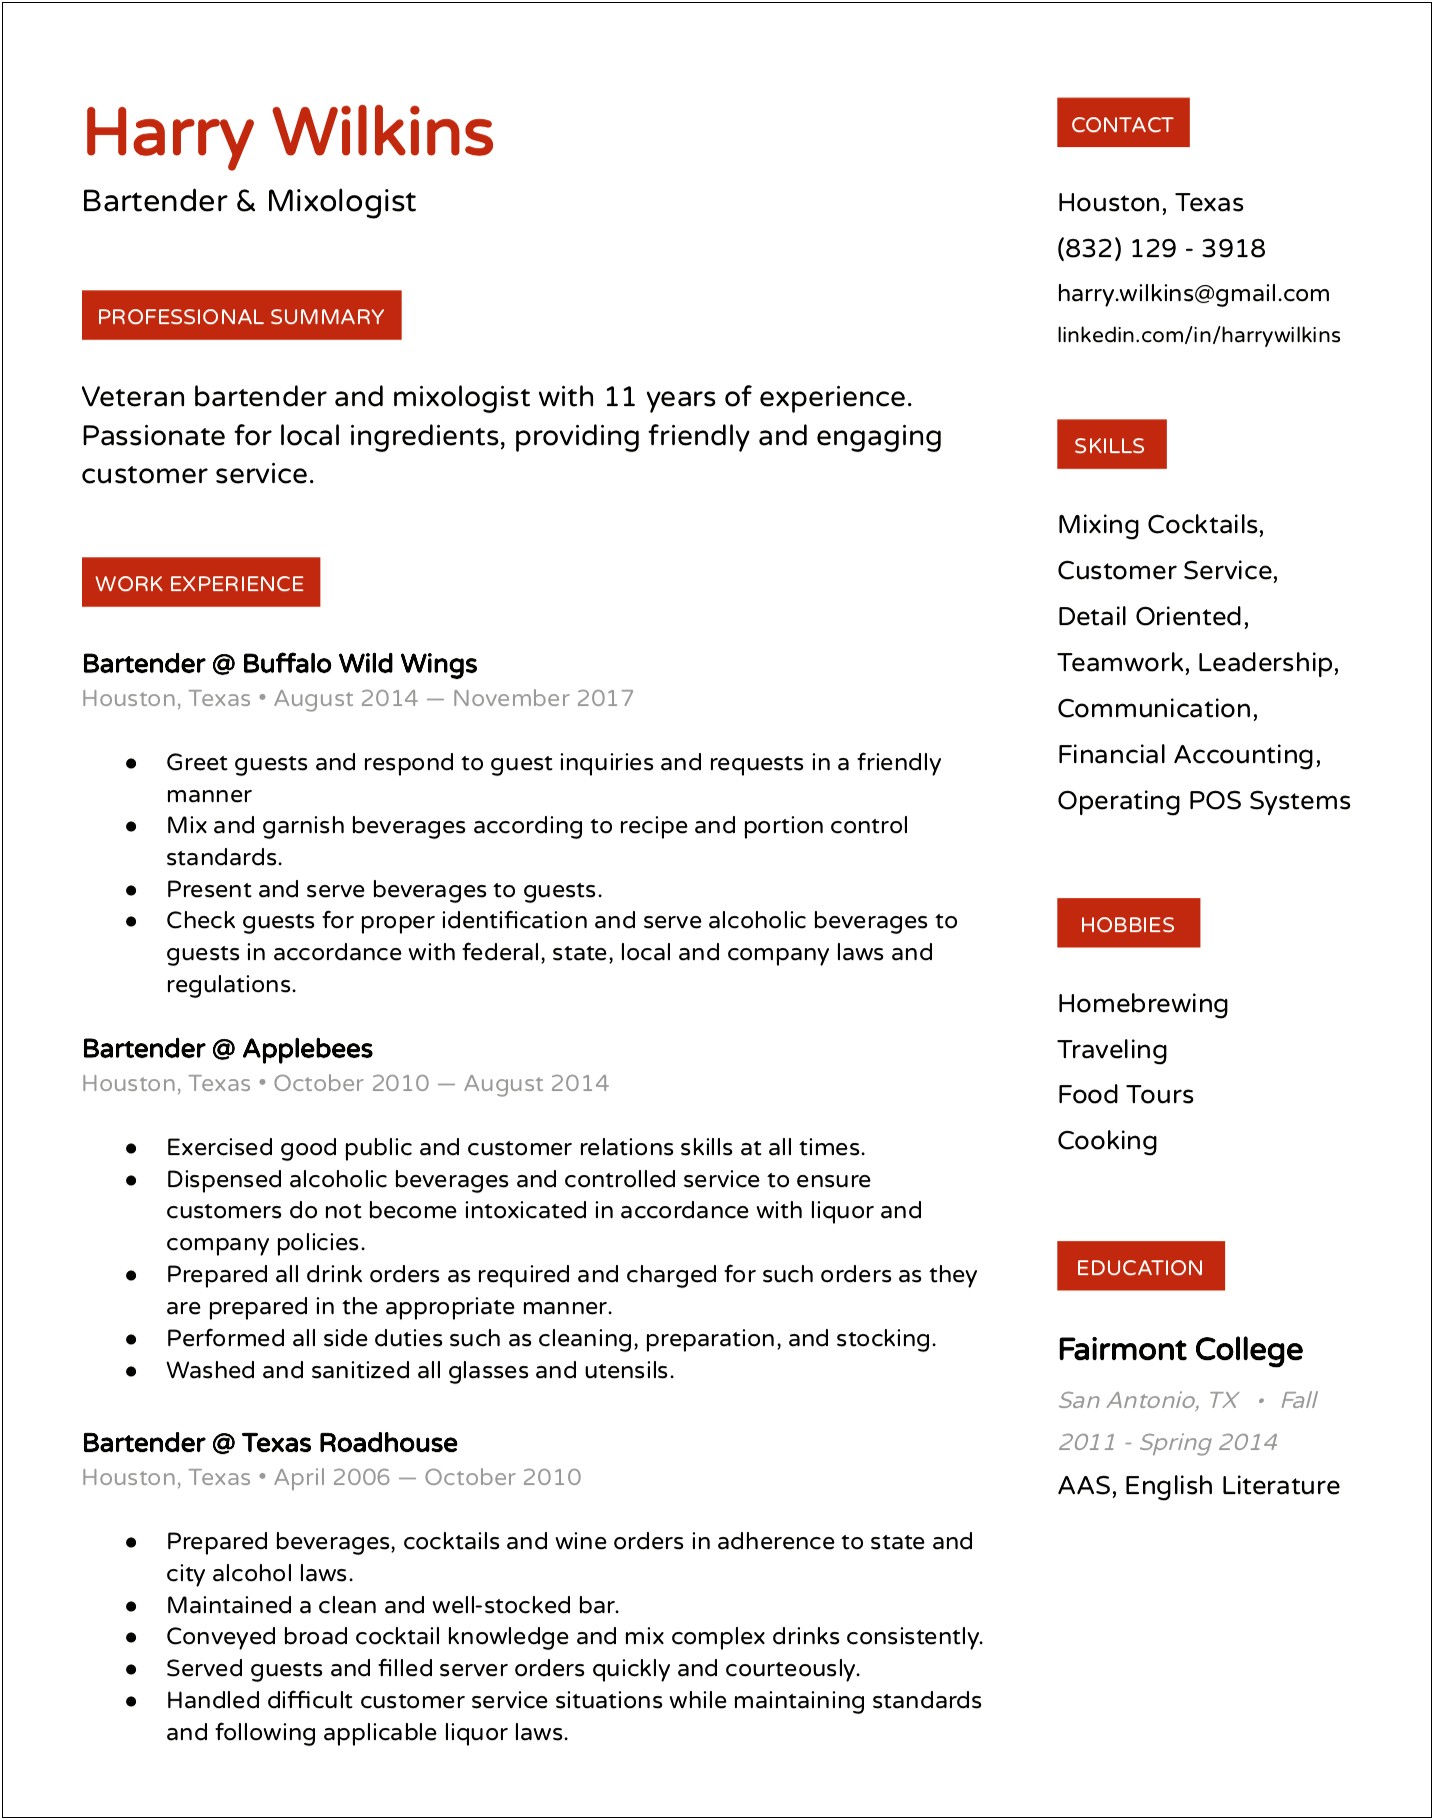 Free Resume Template Downloads Google Docs